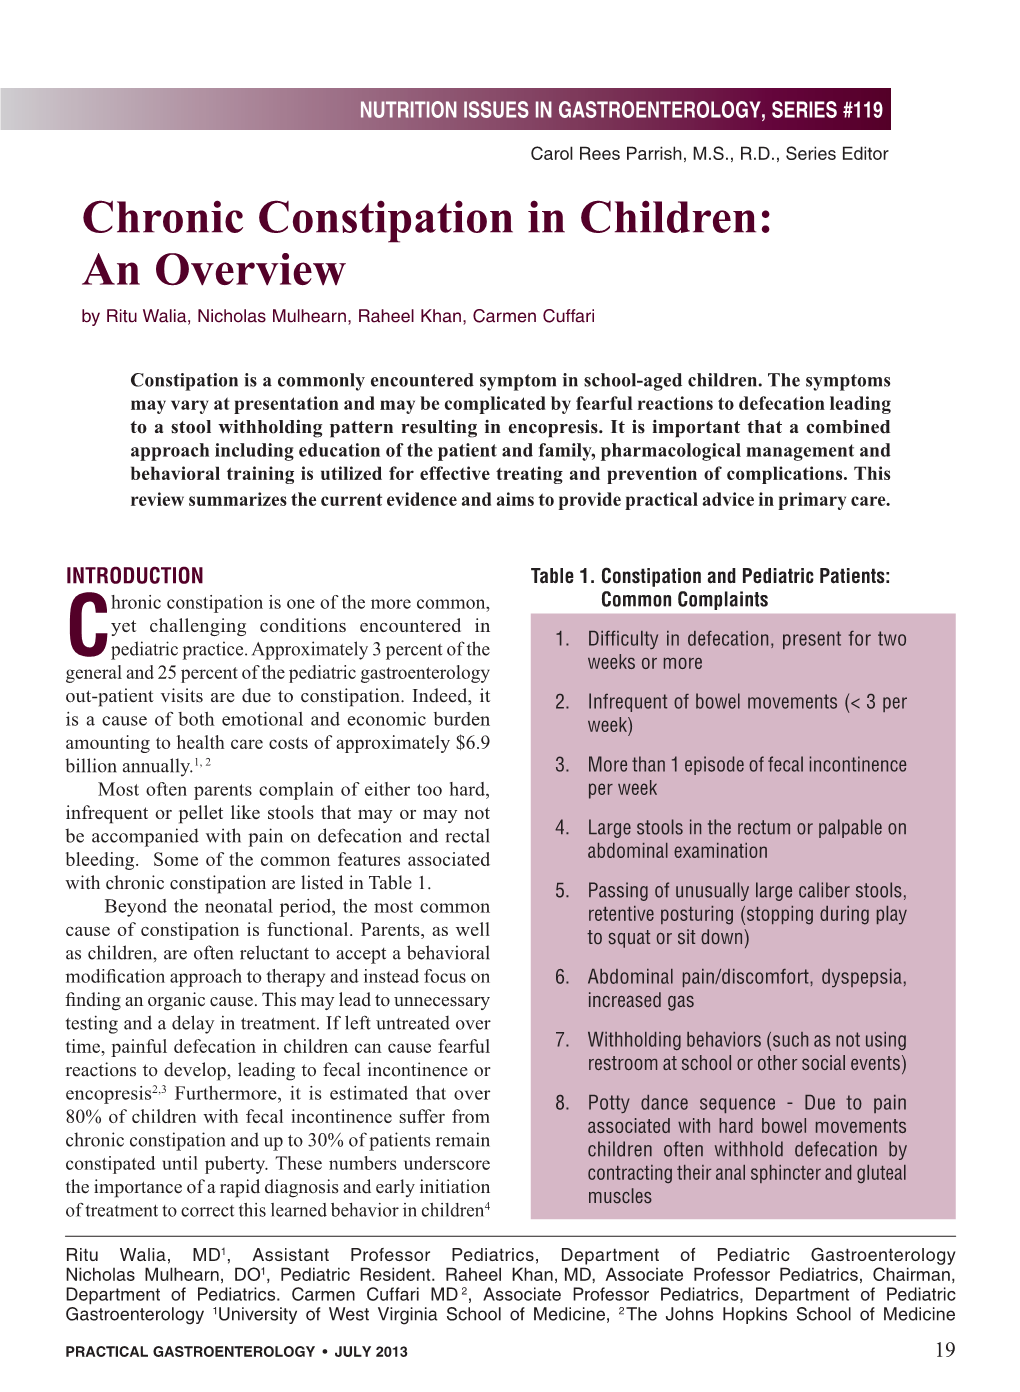 Chronic Constipation in Children: an Overview by Ritu Walia, Nicholas Mulhearn, Raheel Khan, Carmen Cuffari